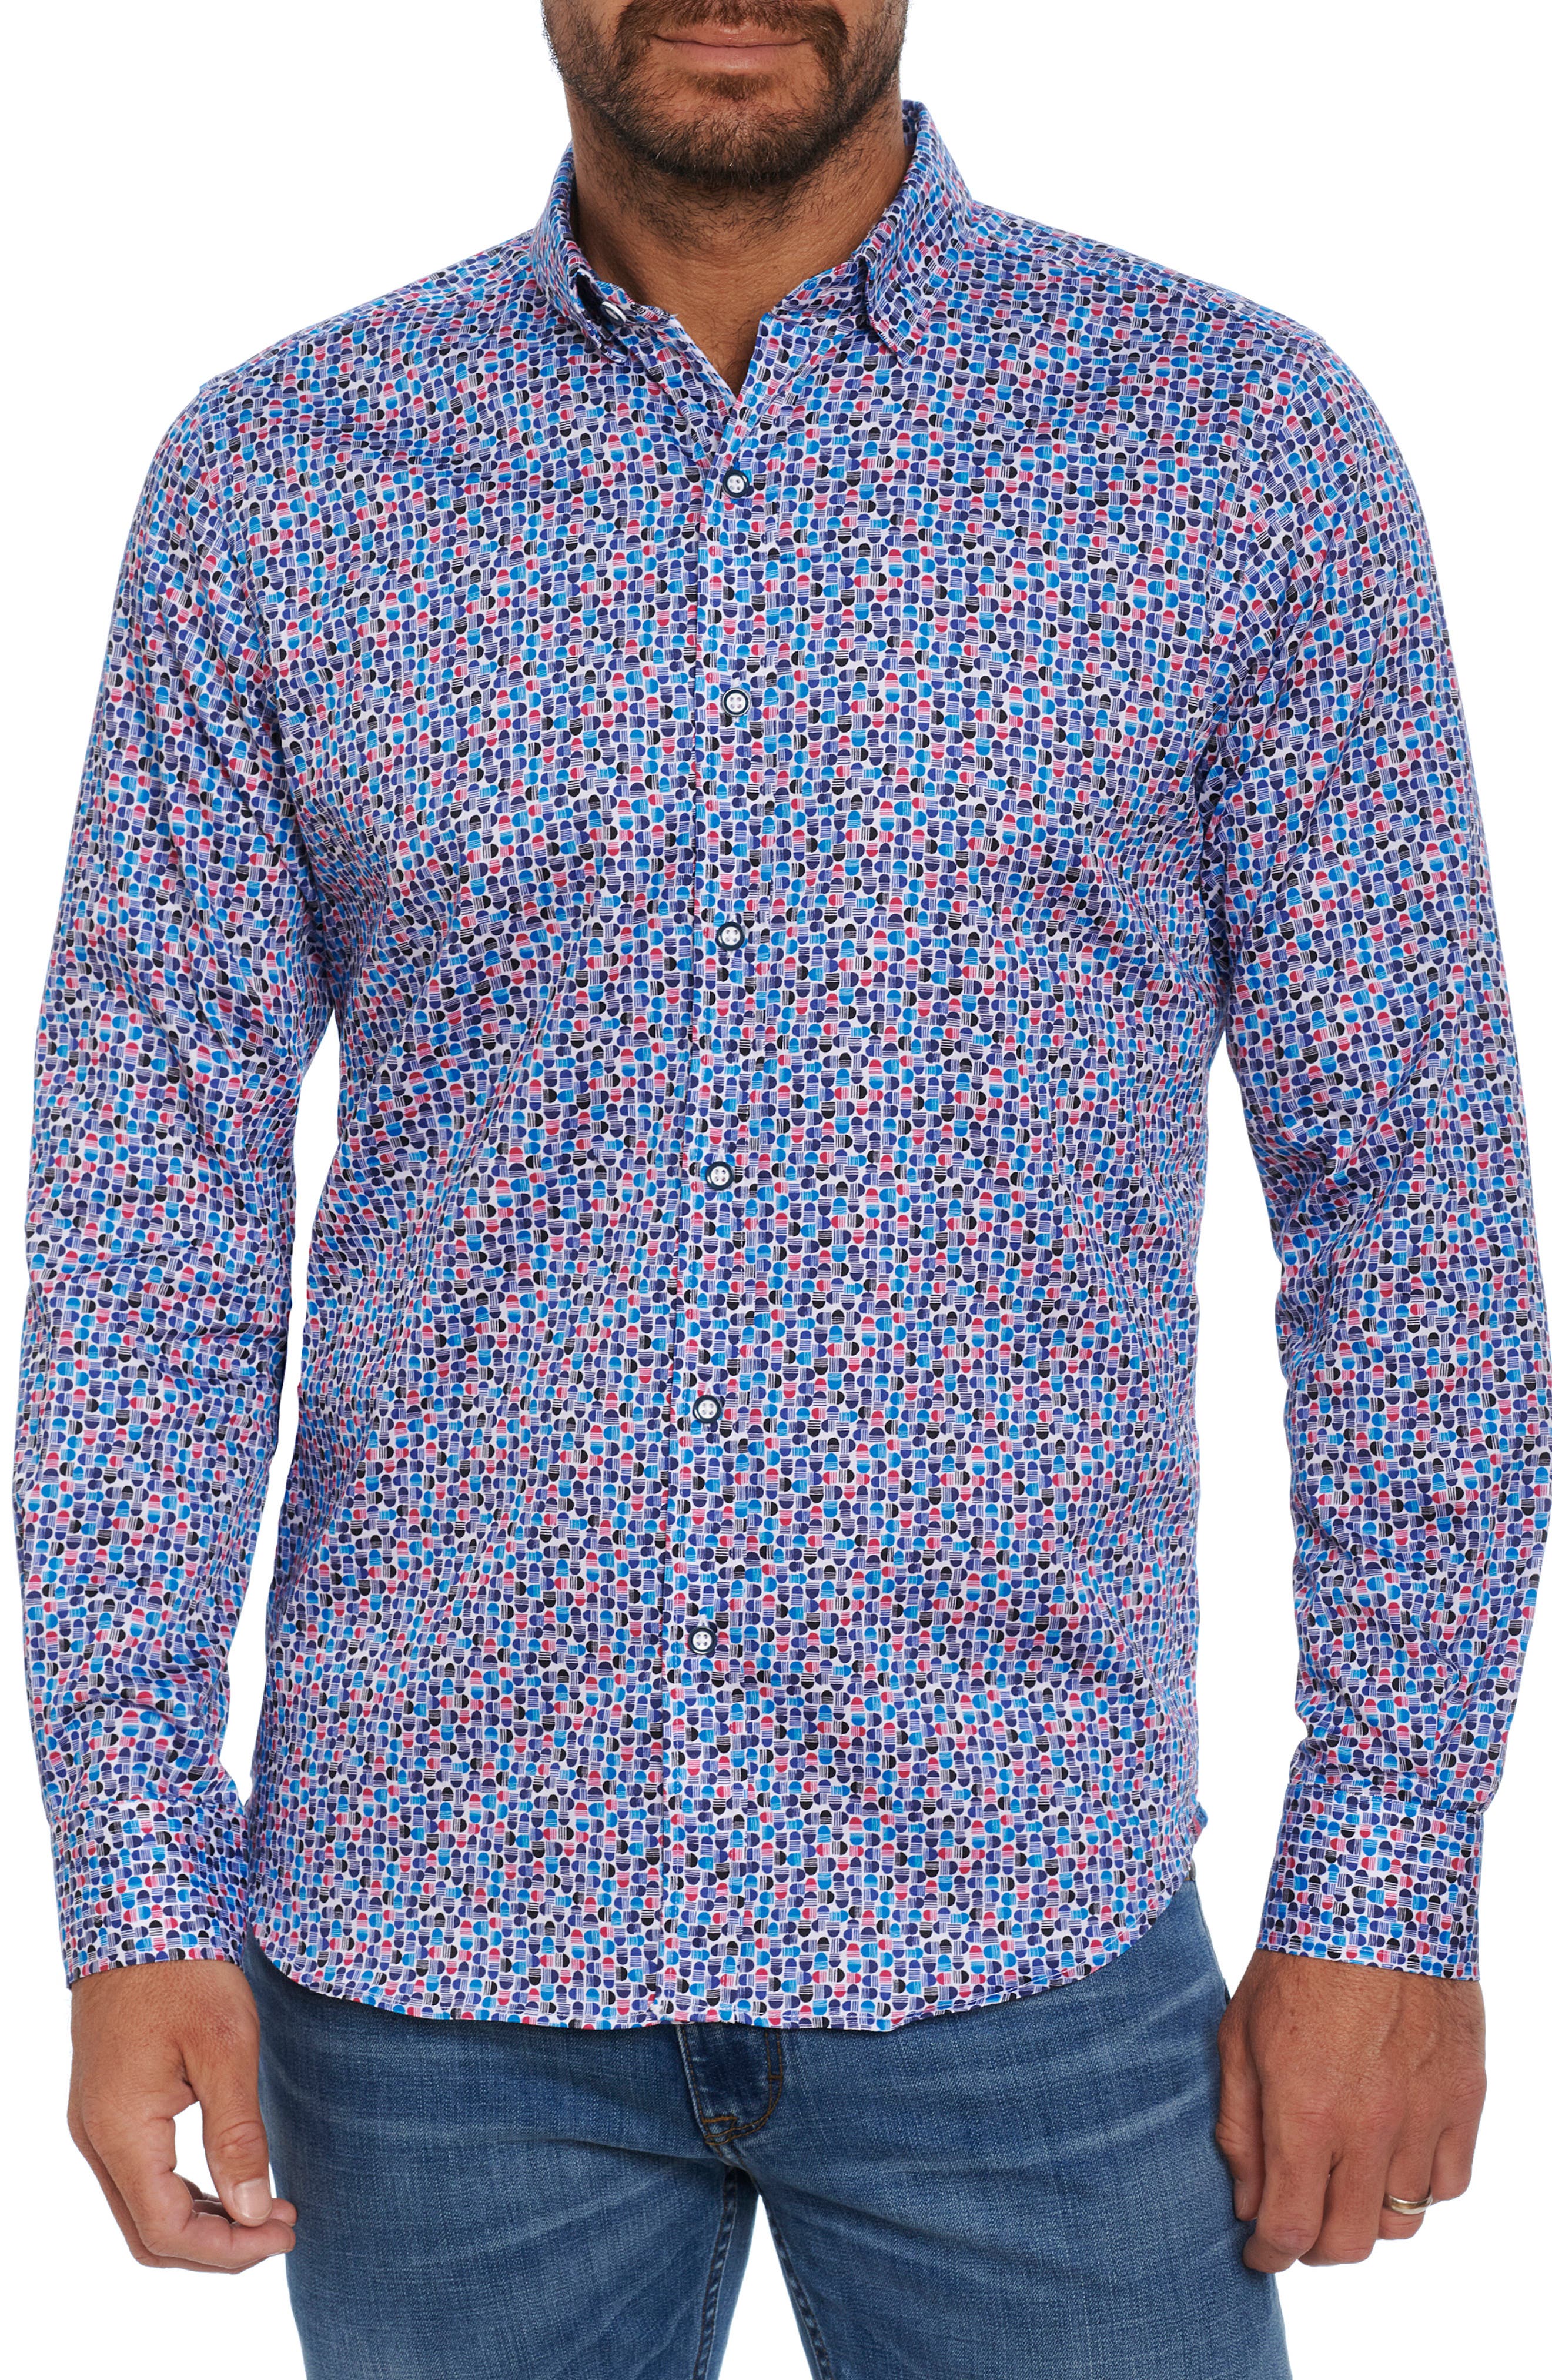 Robert Graham Stunning Octopus Printed Embroidered Shirt NEW XS M L XL